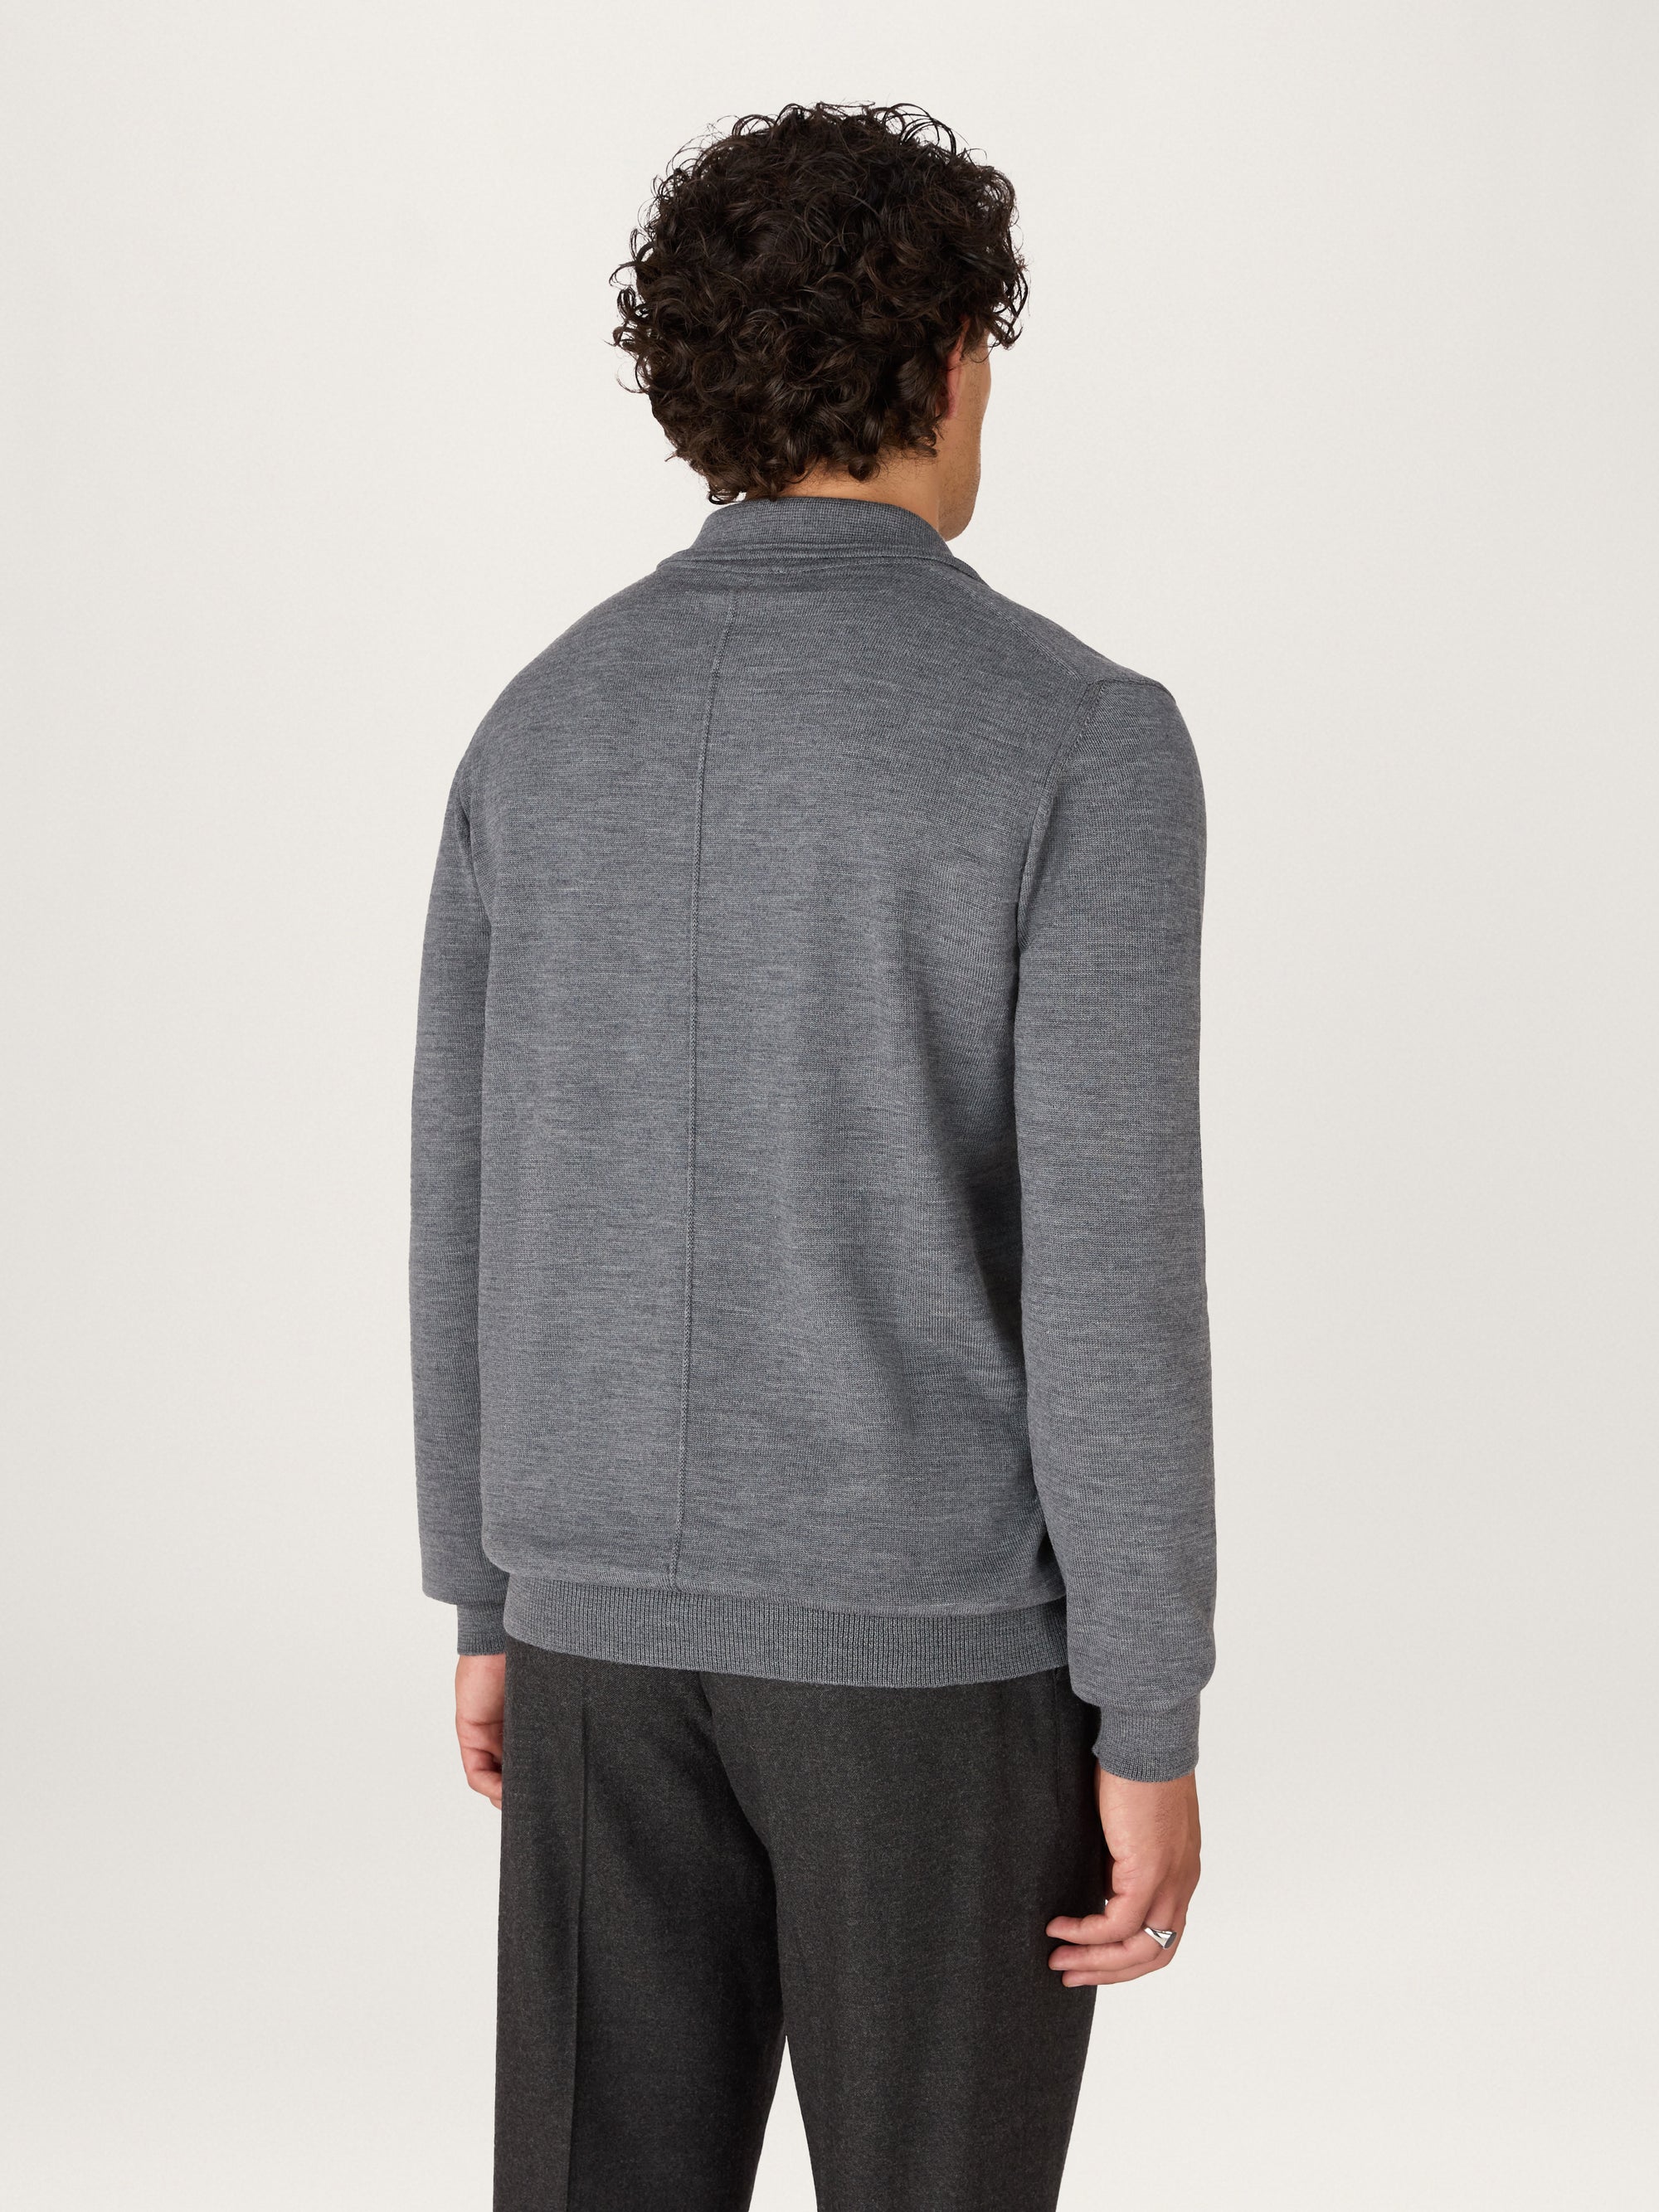 The Lightweight Easy Zip Sweater || Grey | Merino Wool